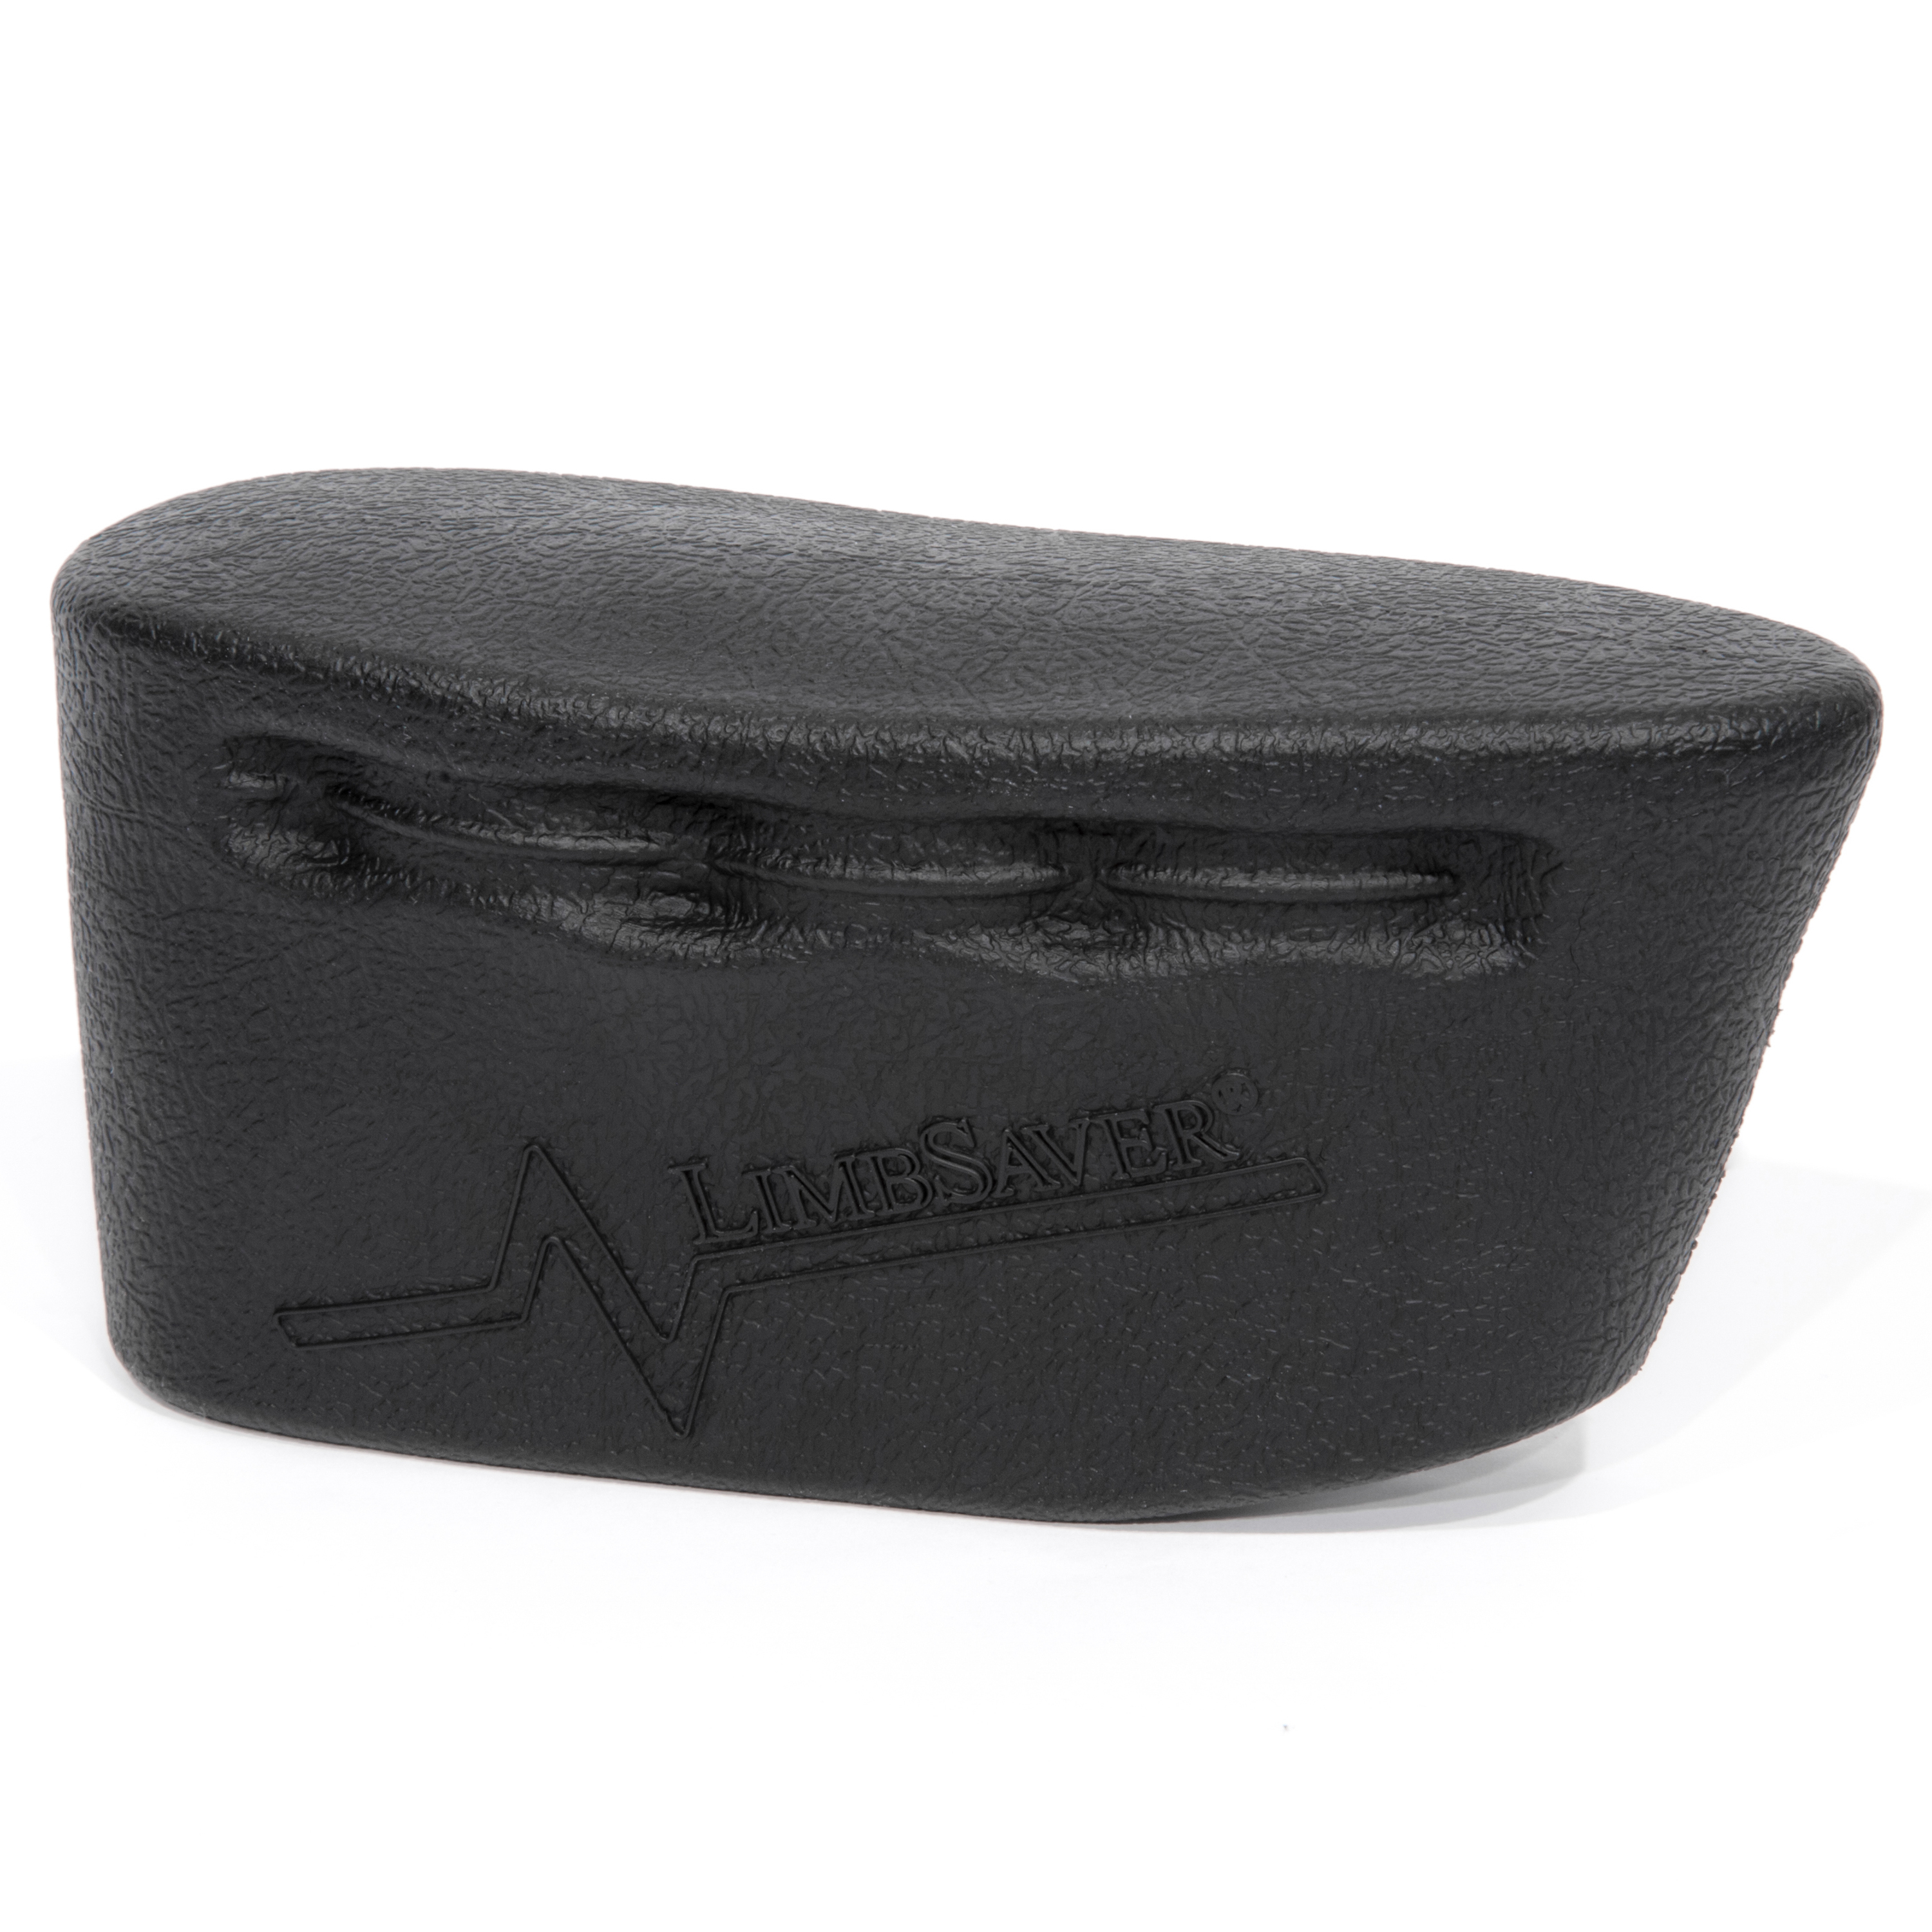 LimbSaver AirTech Slip-On Recoil Pad, size Medium 10551 - image 3 of 11